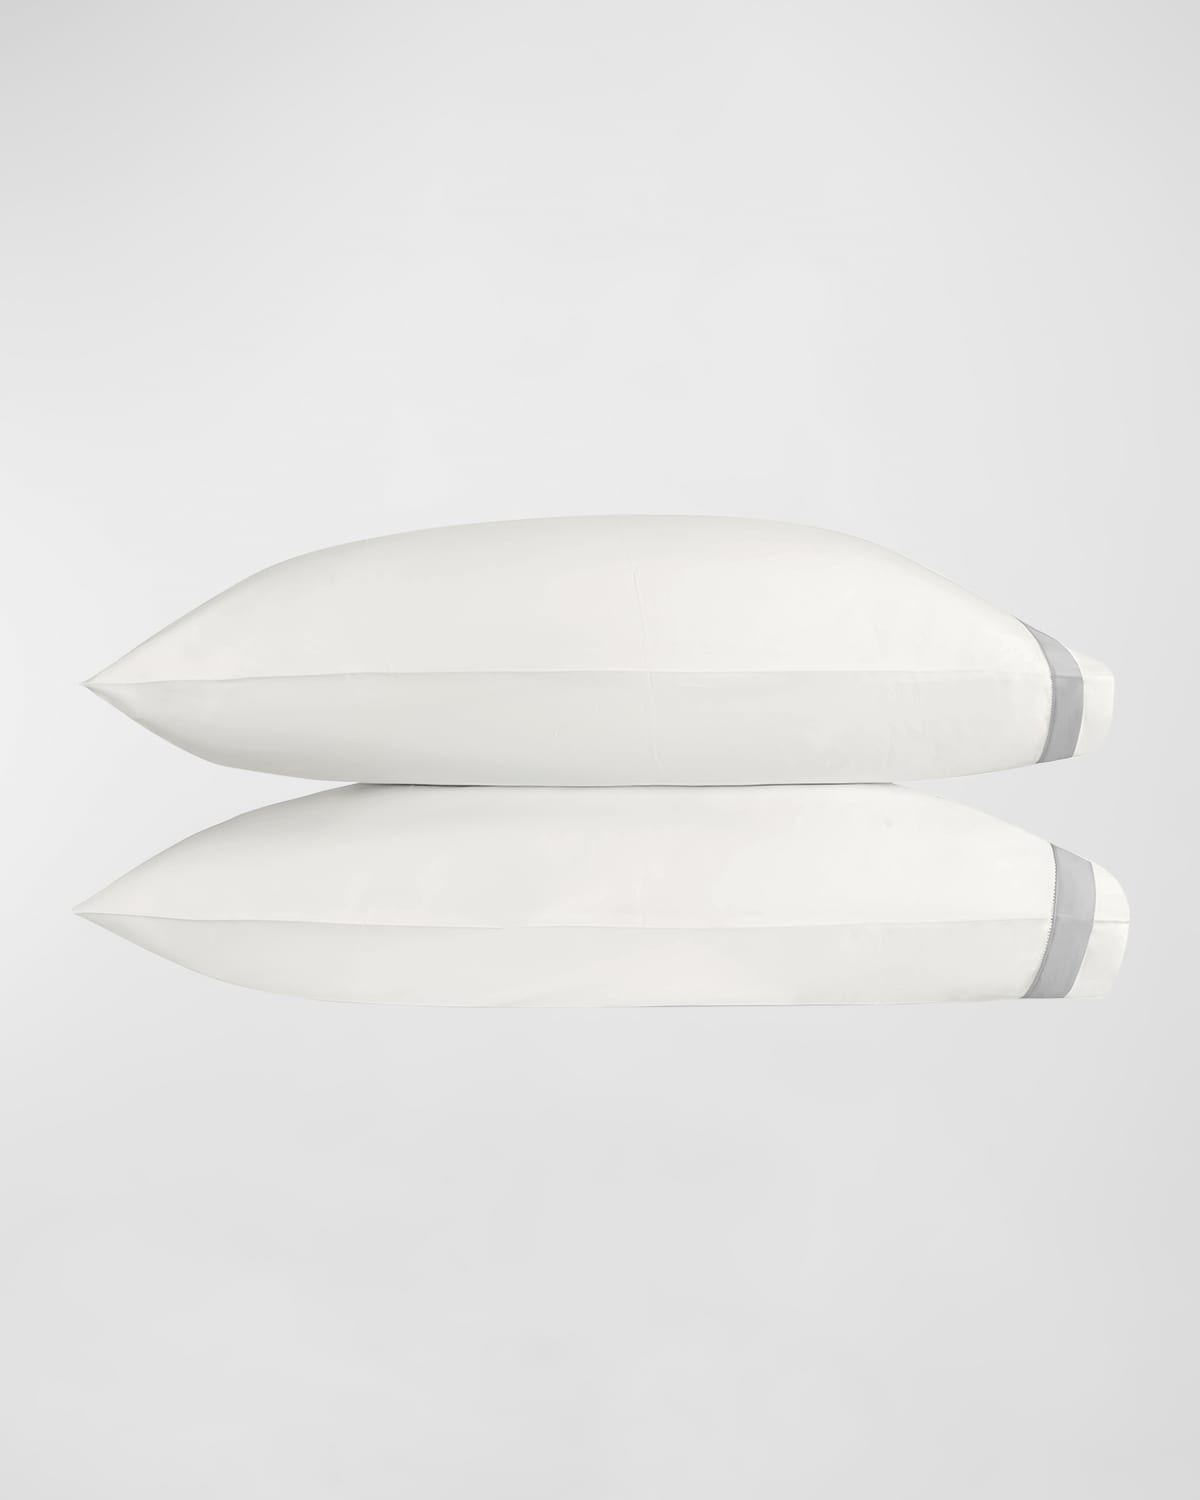 Matouk Ambrose Standard Pillowcases, Set Of 2 In White